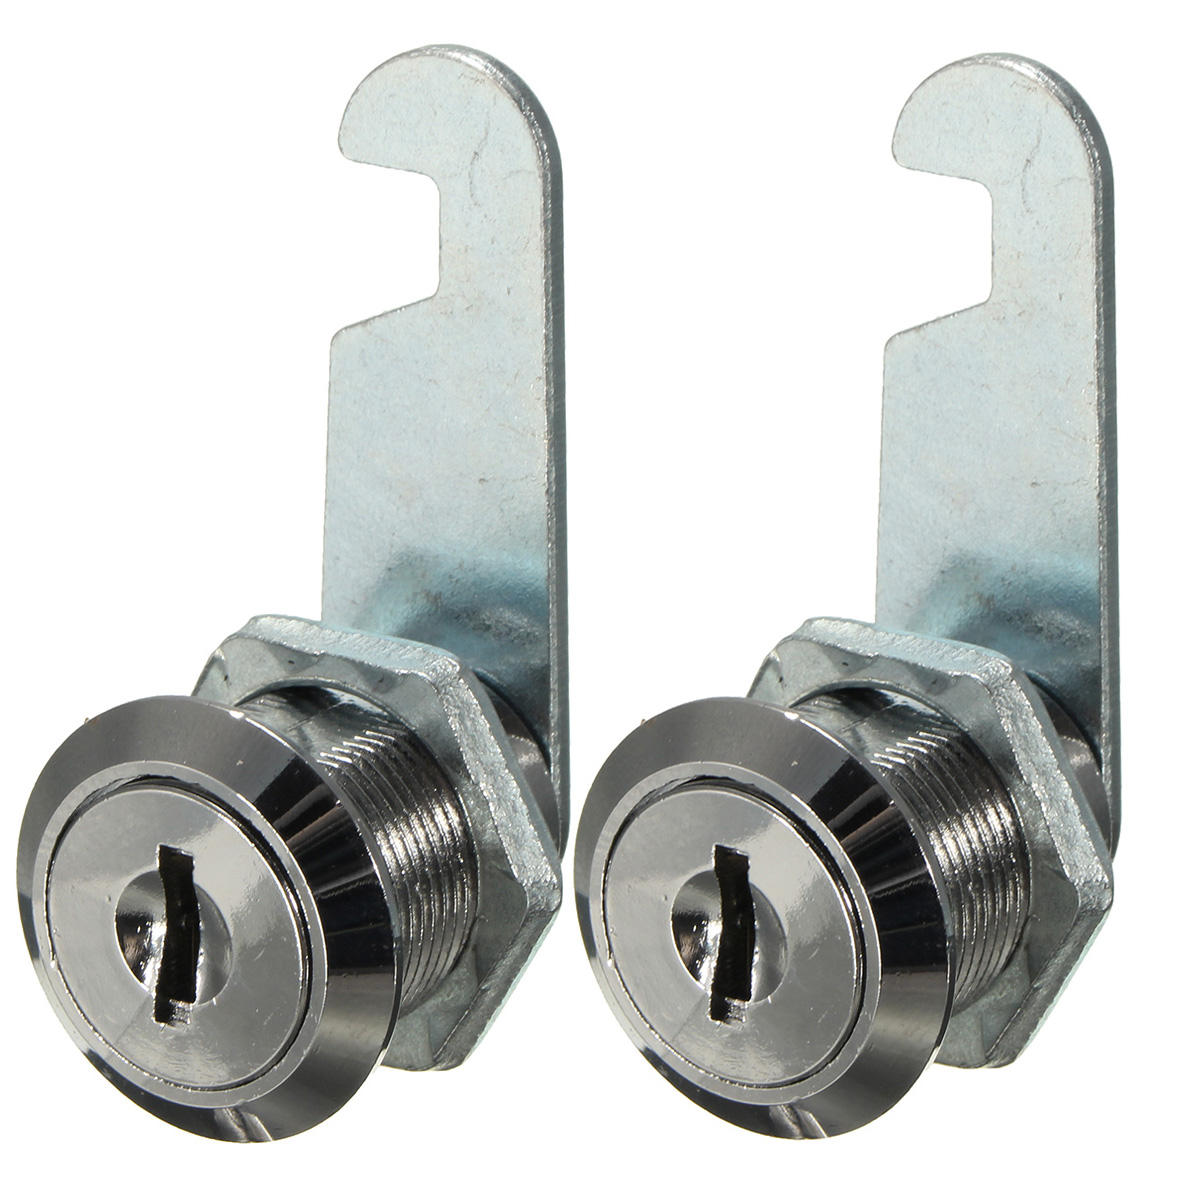 Zinc Alloy Cam Lock Archiefkast Brievenbus Ladekast Locker met twee sleutels 16mm / 20mm